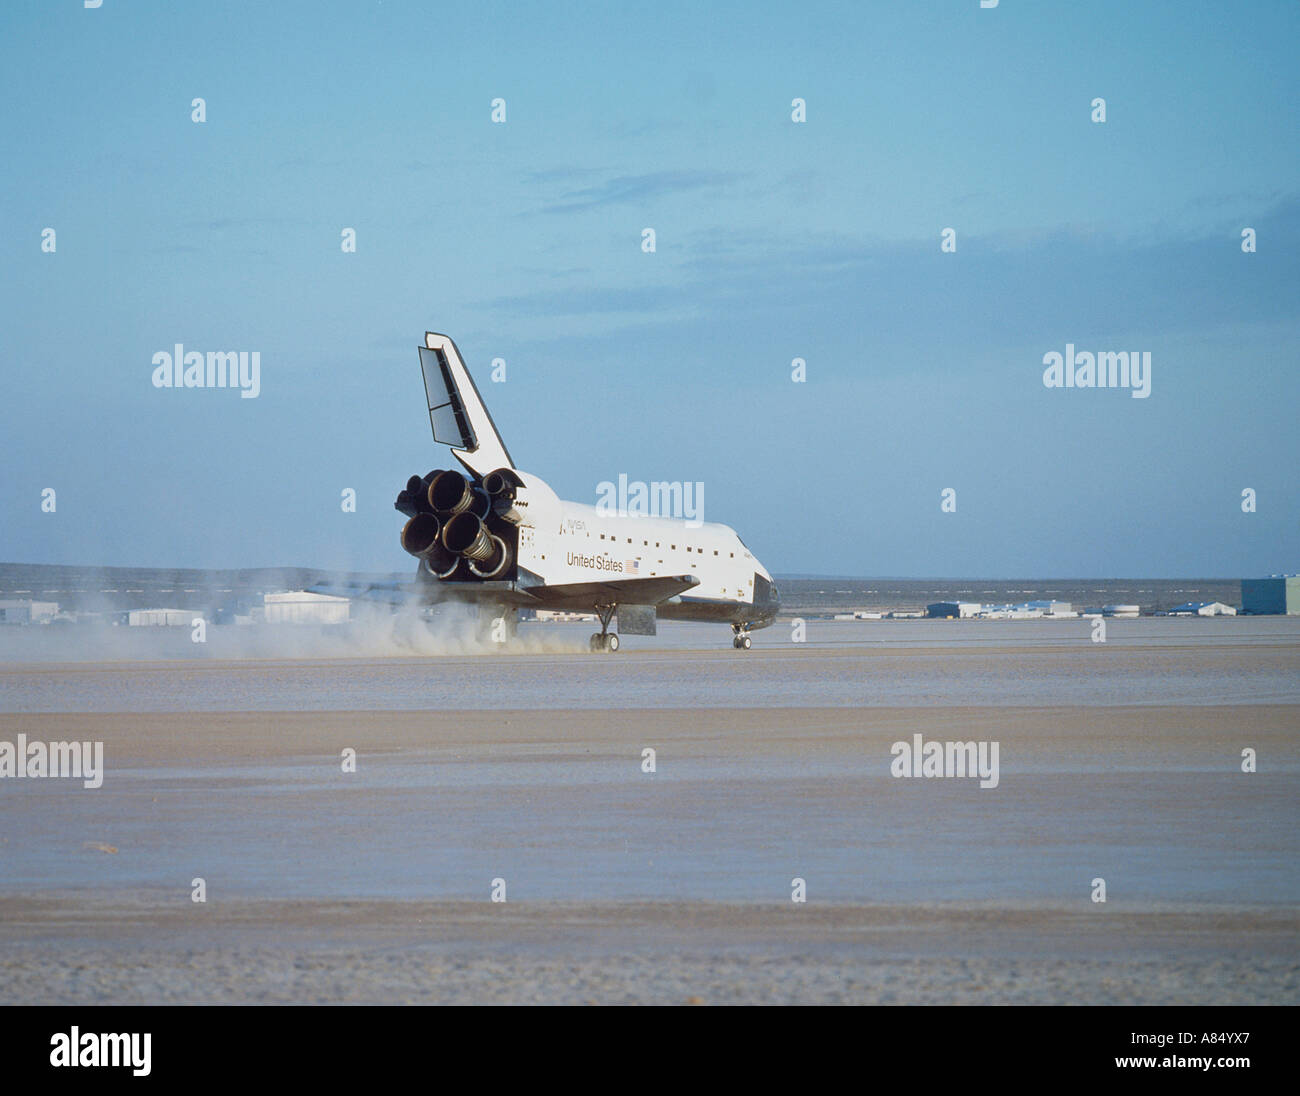 USA. California. Space Shuttle Atlantis landing at Edwards Air Force base runway. Stock Photo